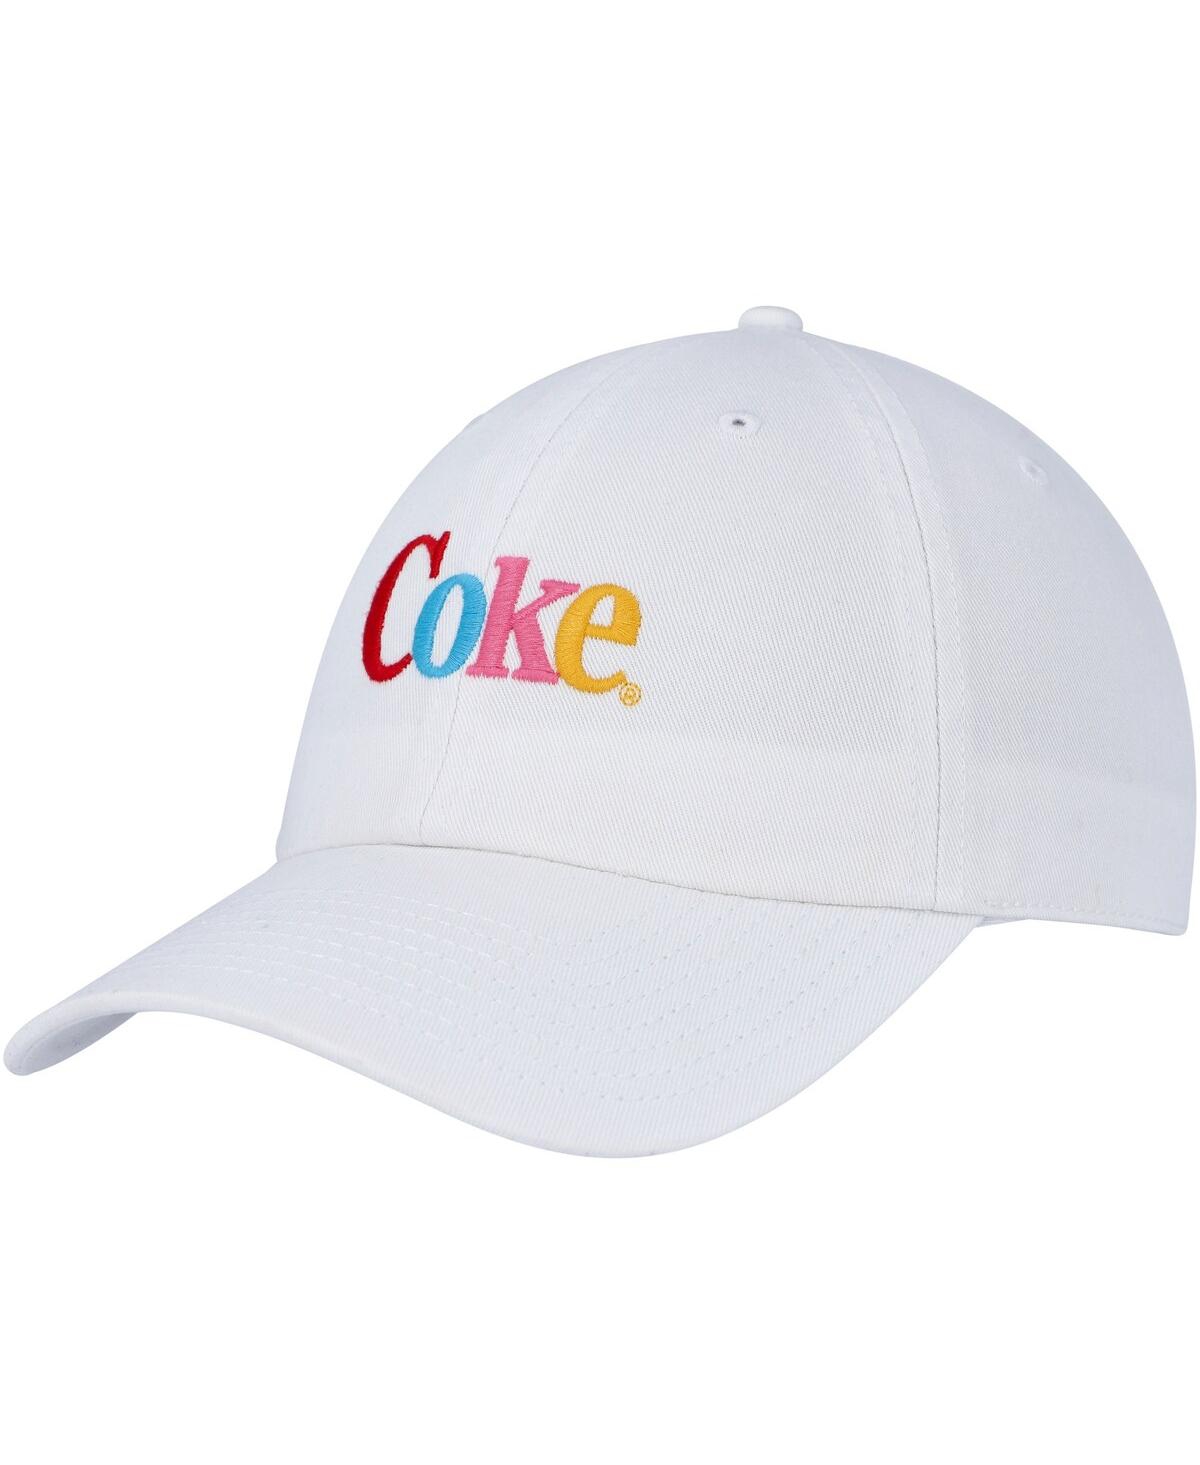 American Needle Men's  White Coca-cola Ballpark Adjustable Hat